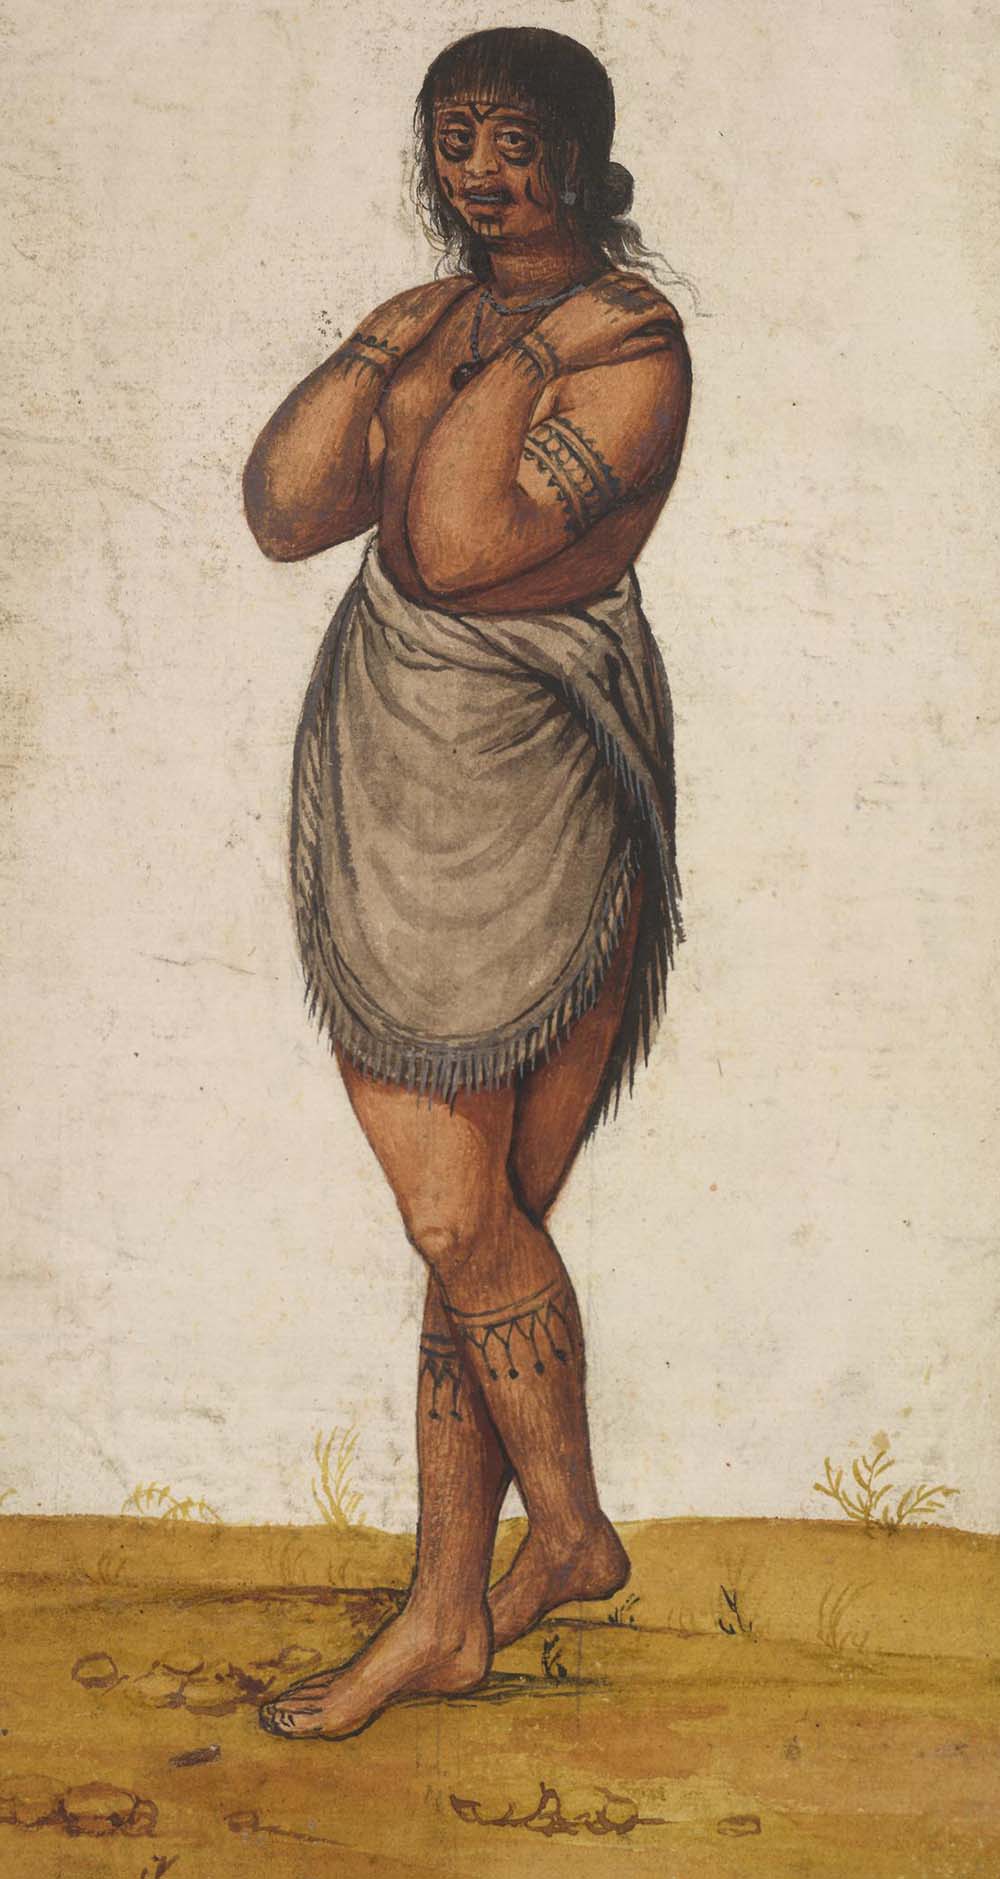 A young woman of Aquascogoc, by John White, c. 1585.